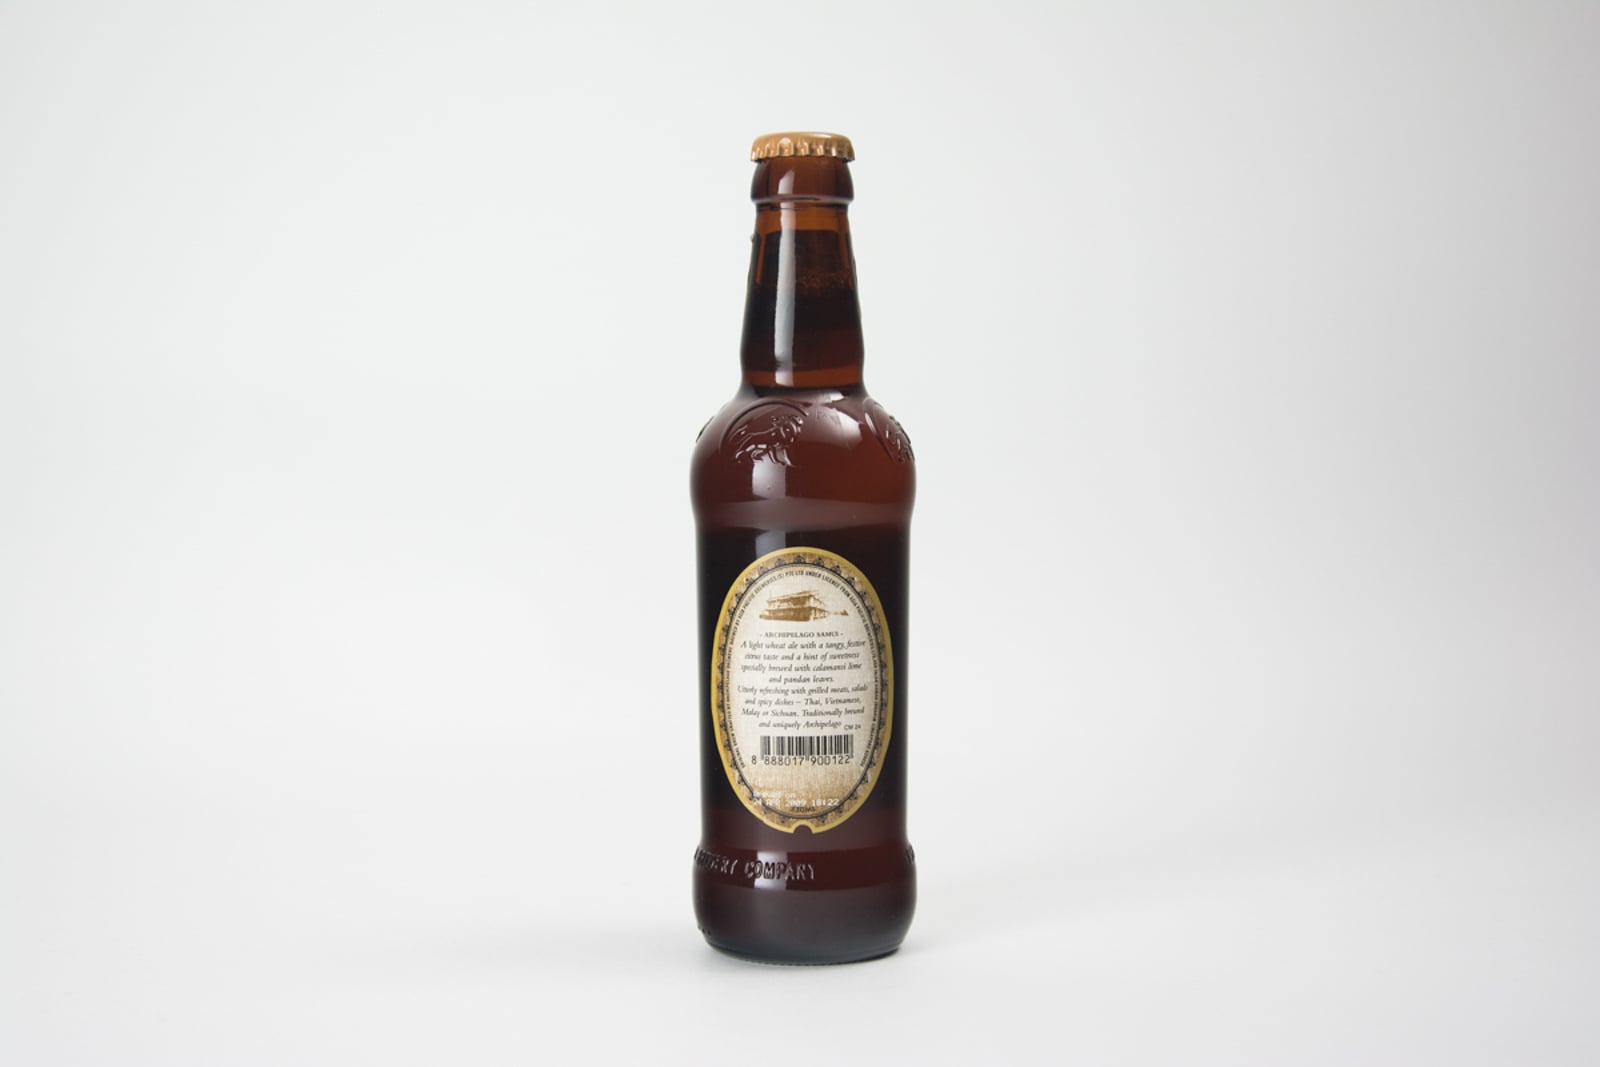 Archipelago SAMUI Original Craft Beer Bottle, 330 ml